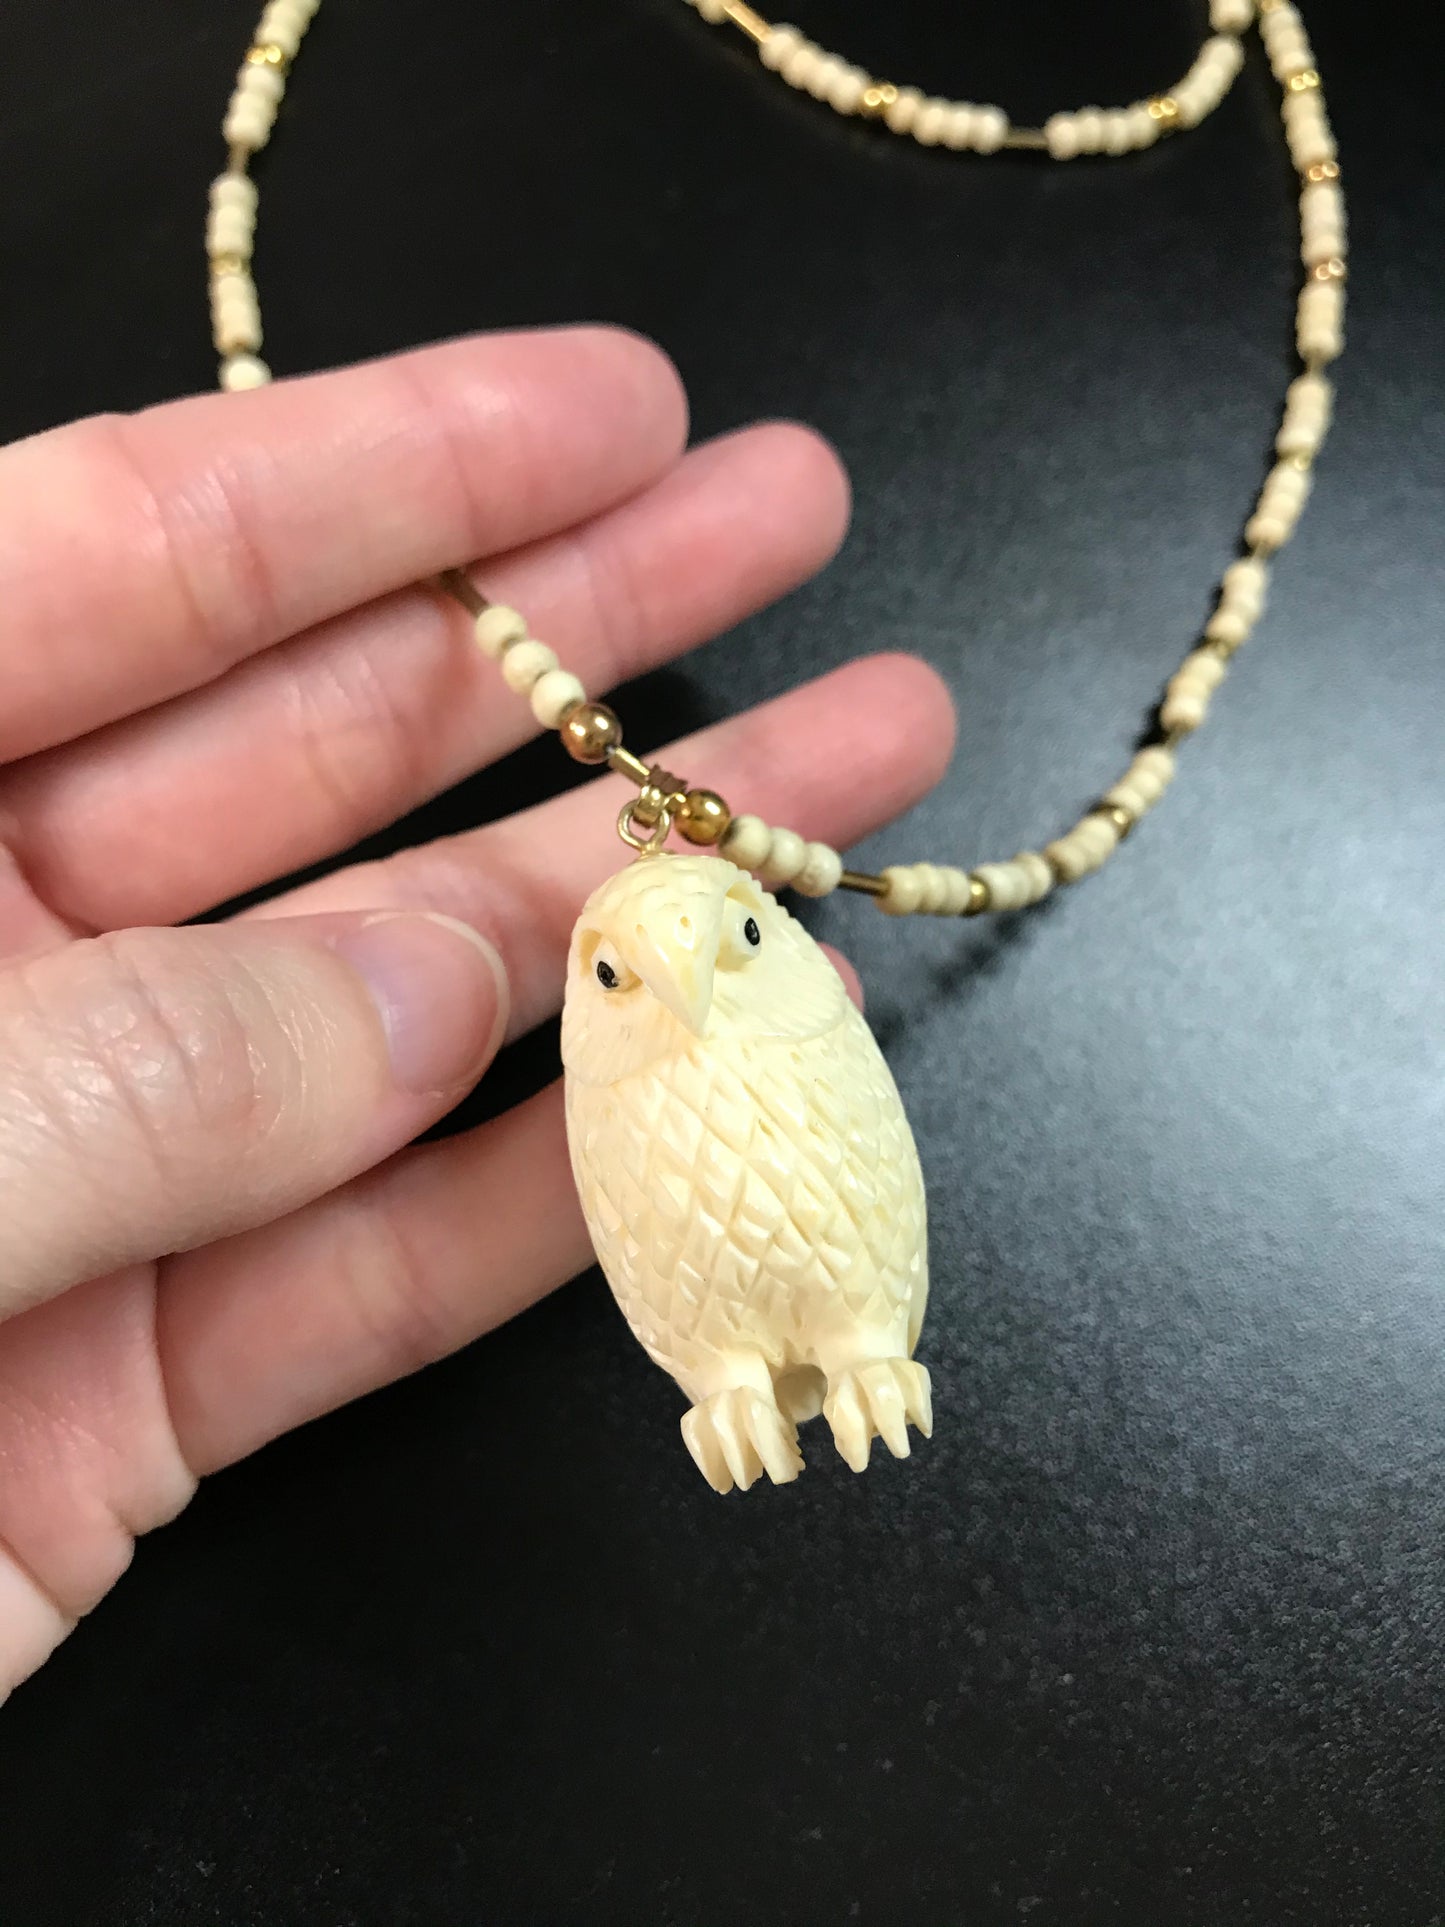 21" long Elk Bone Necklace and bracelet set with Owl Pendant